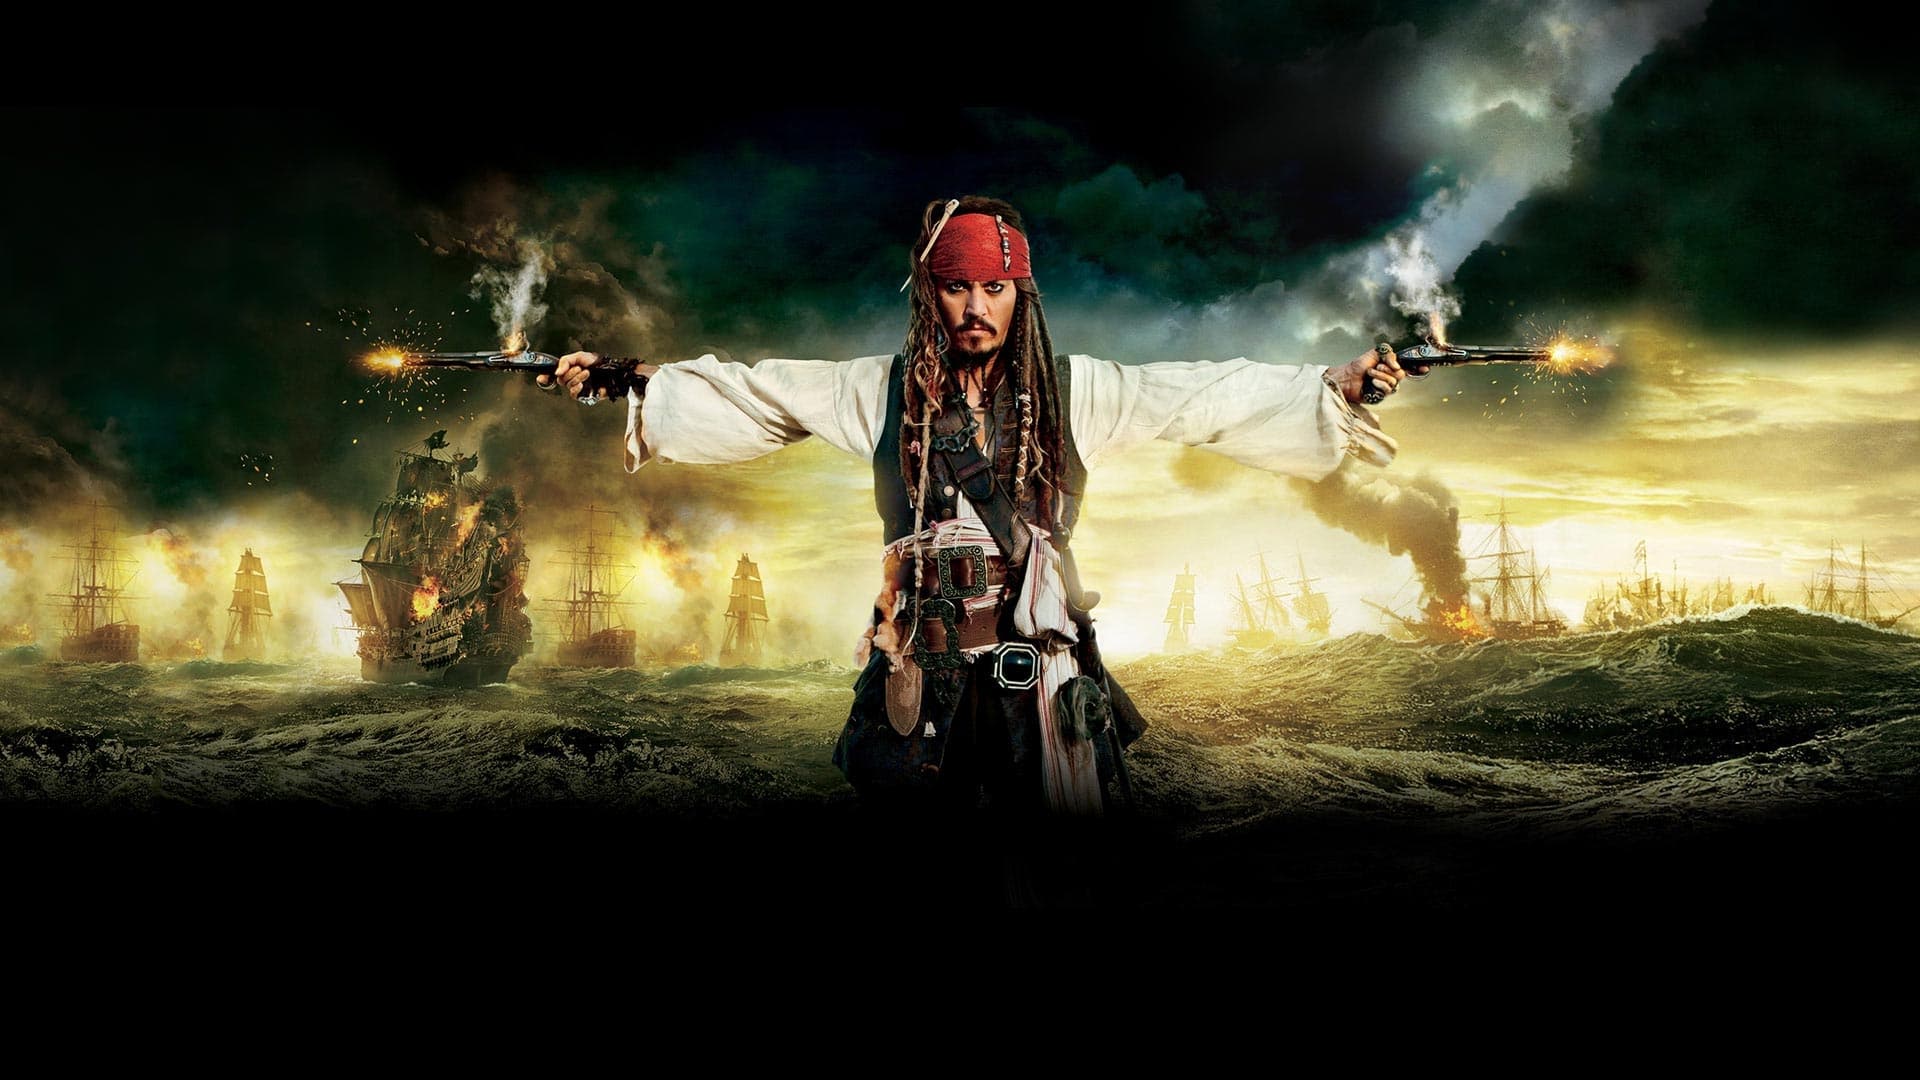 Pirates of the Caribbean: I främmande farvatten (2011)